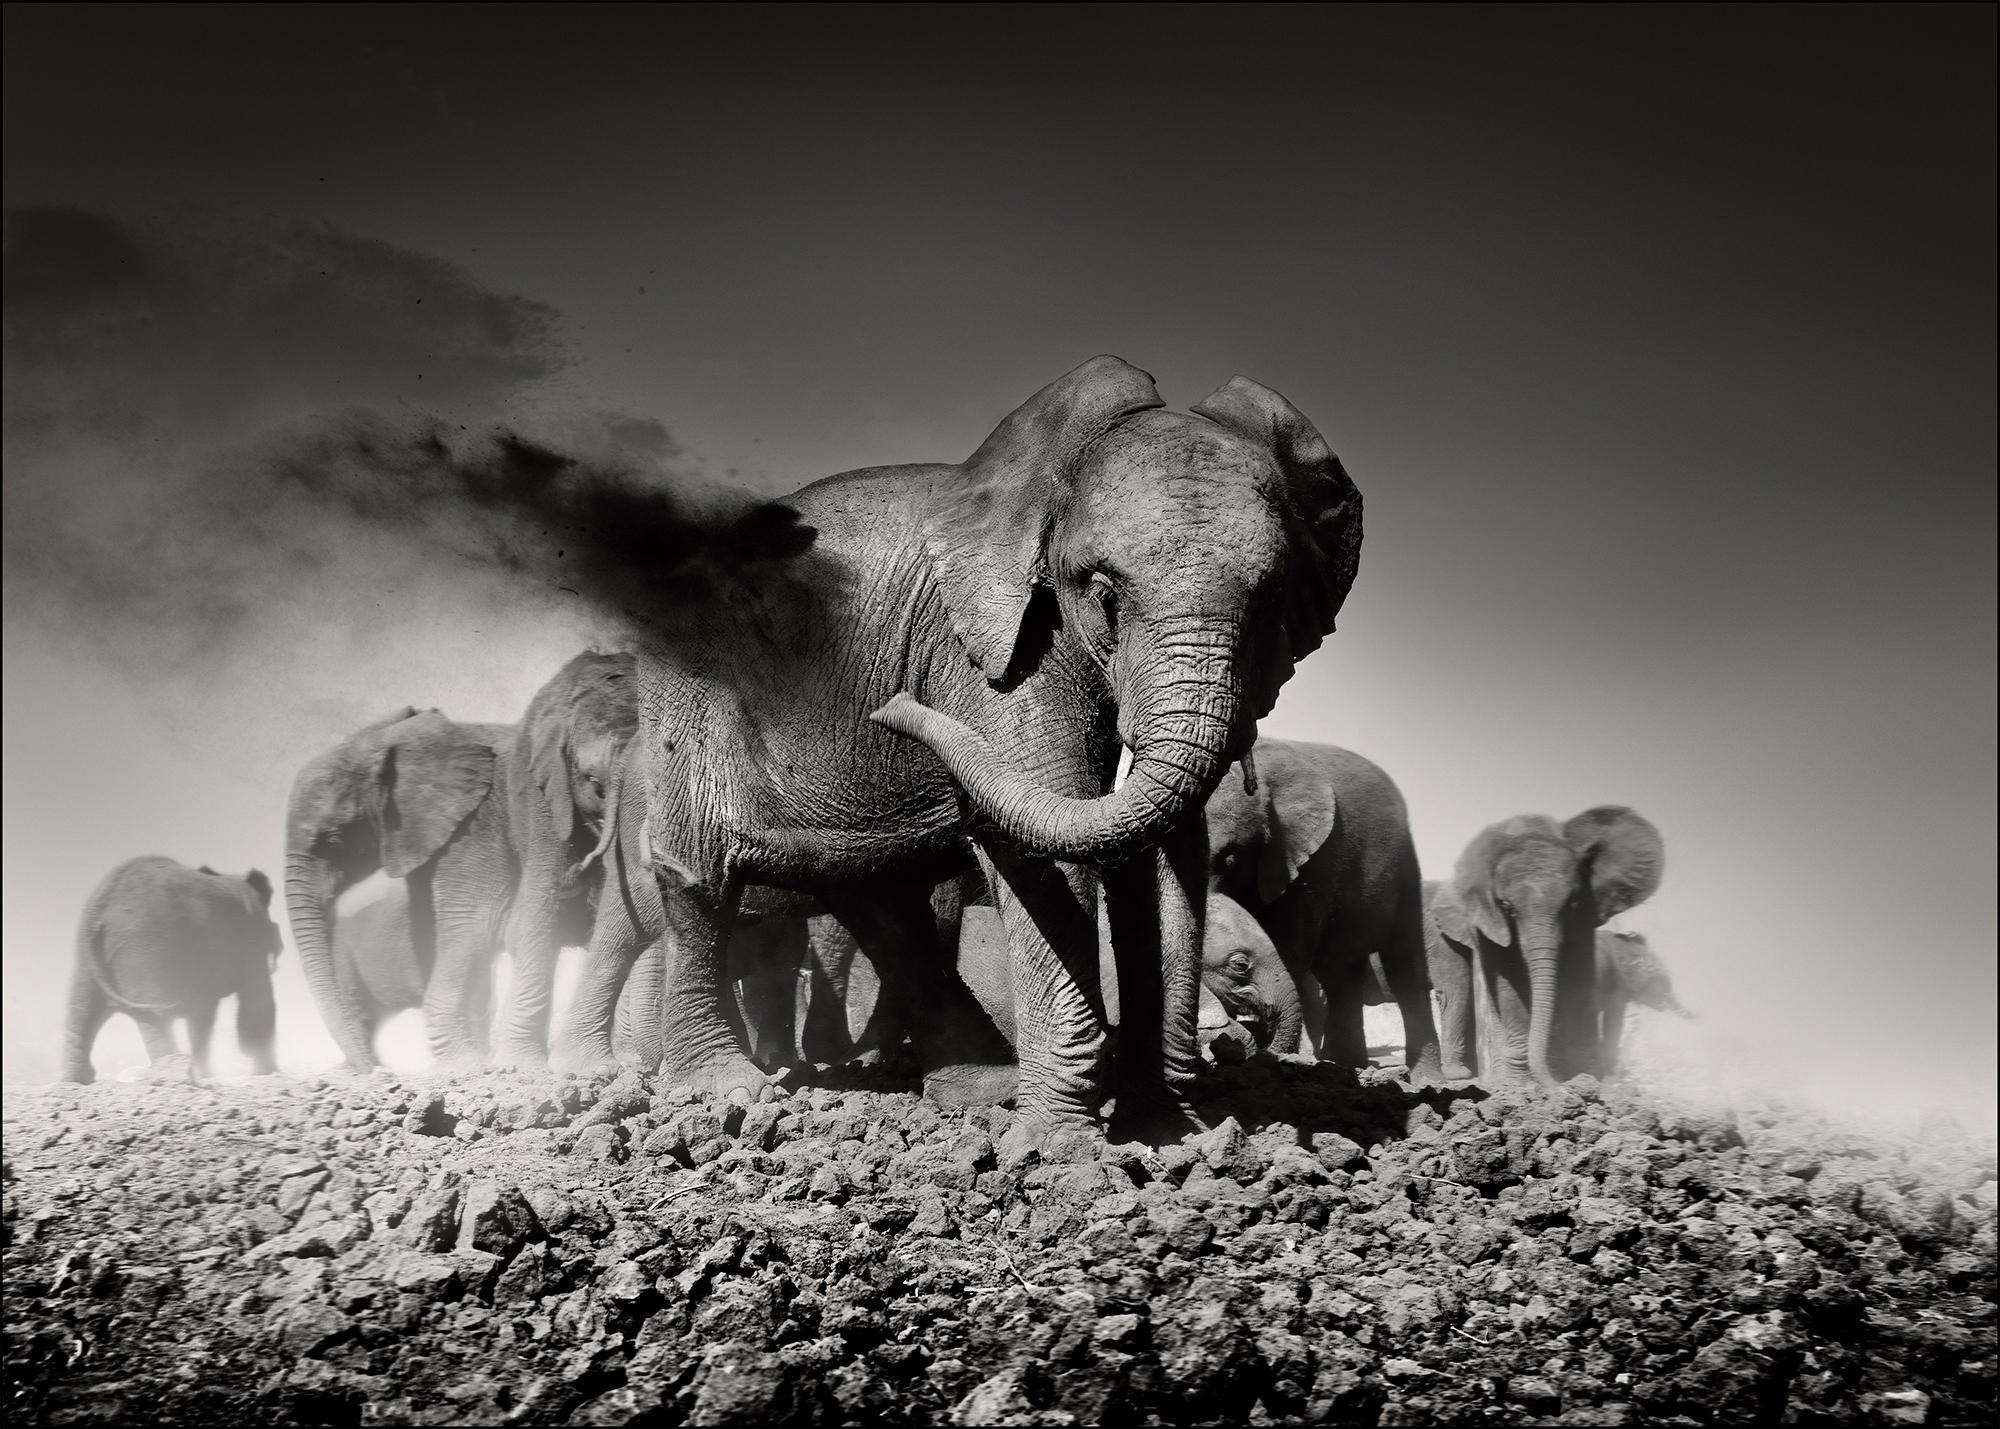 Joachim Schmeisser Portrait Photograph - Earth I, animal, wildlife, black and white photography, elephant, africa